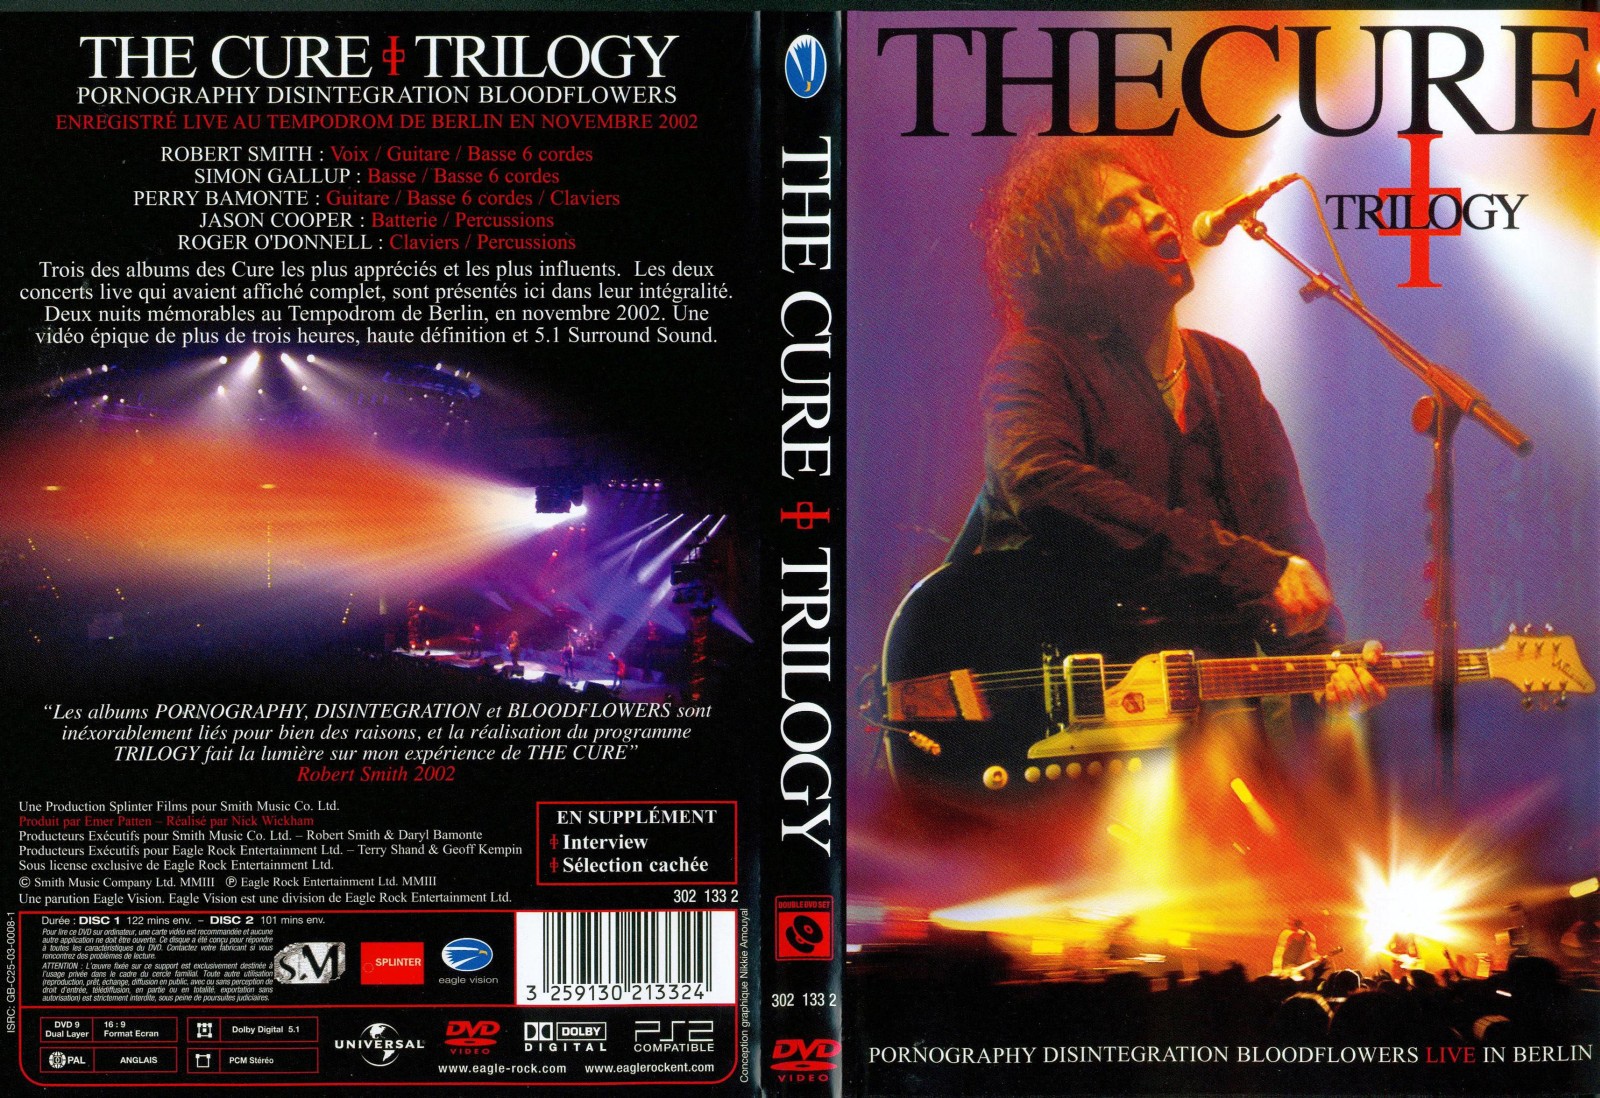 Jaquette DVD The Cure trilogy